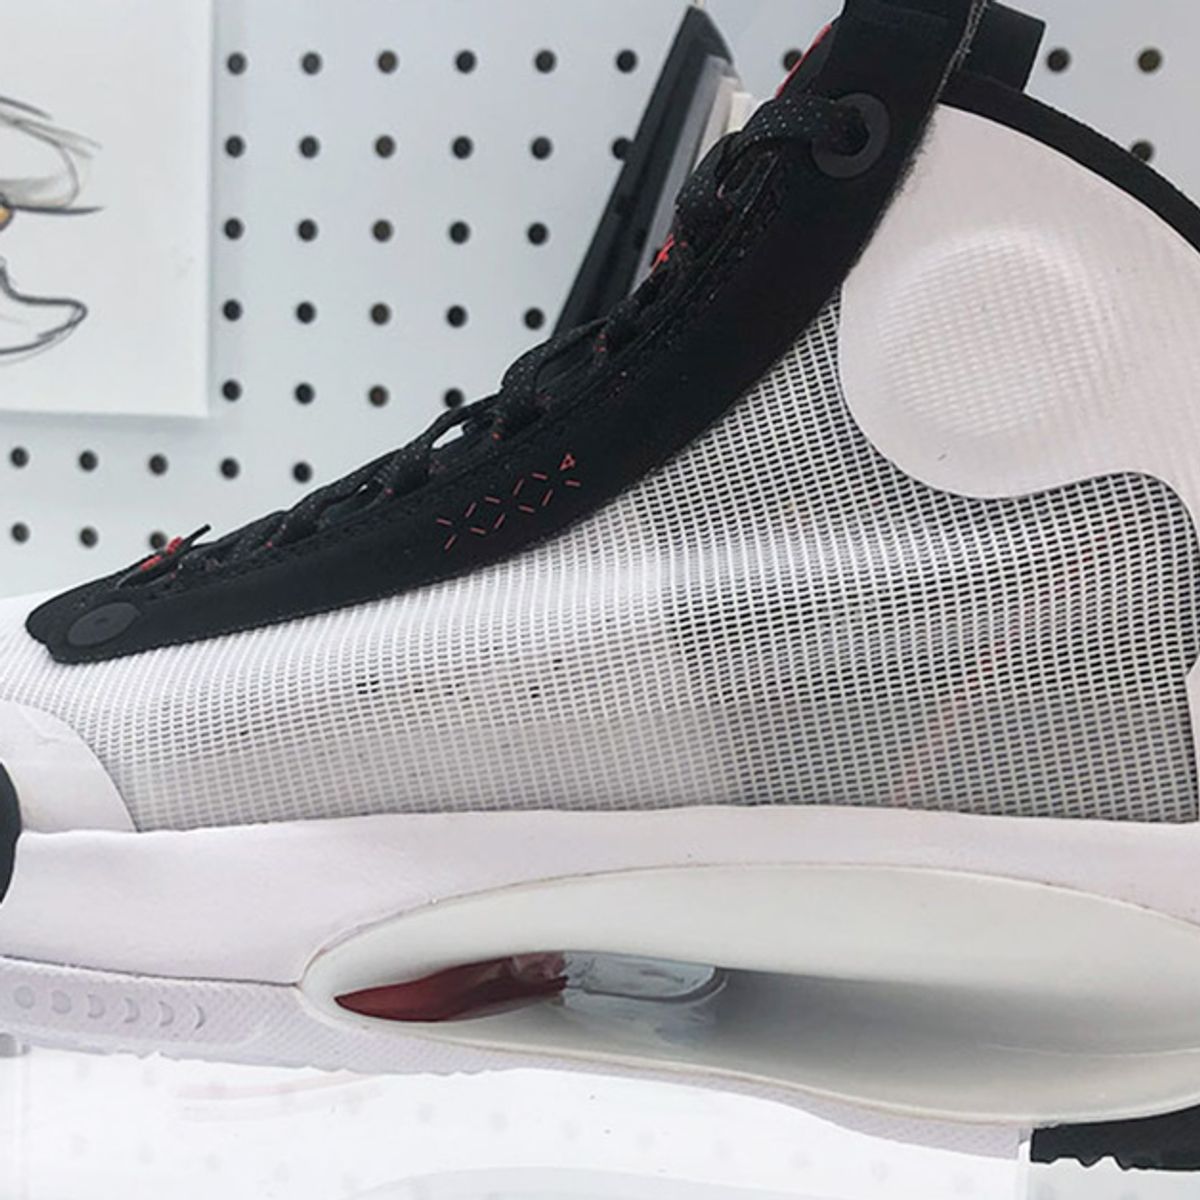 Exclusive: An Up-Close Look the Air Jordan 34 - Sneaker Freaker